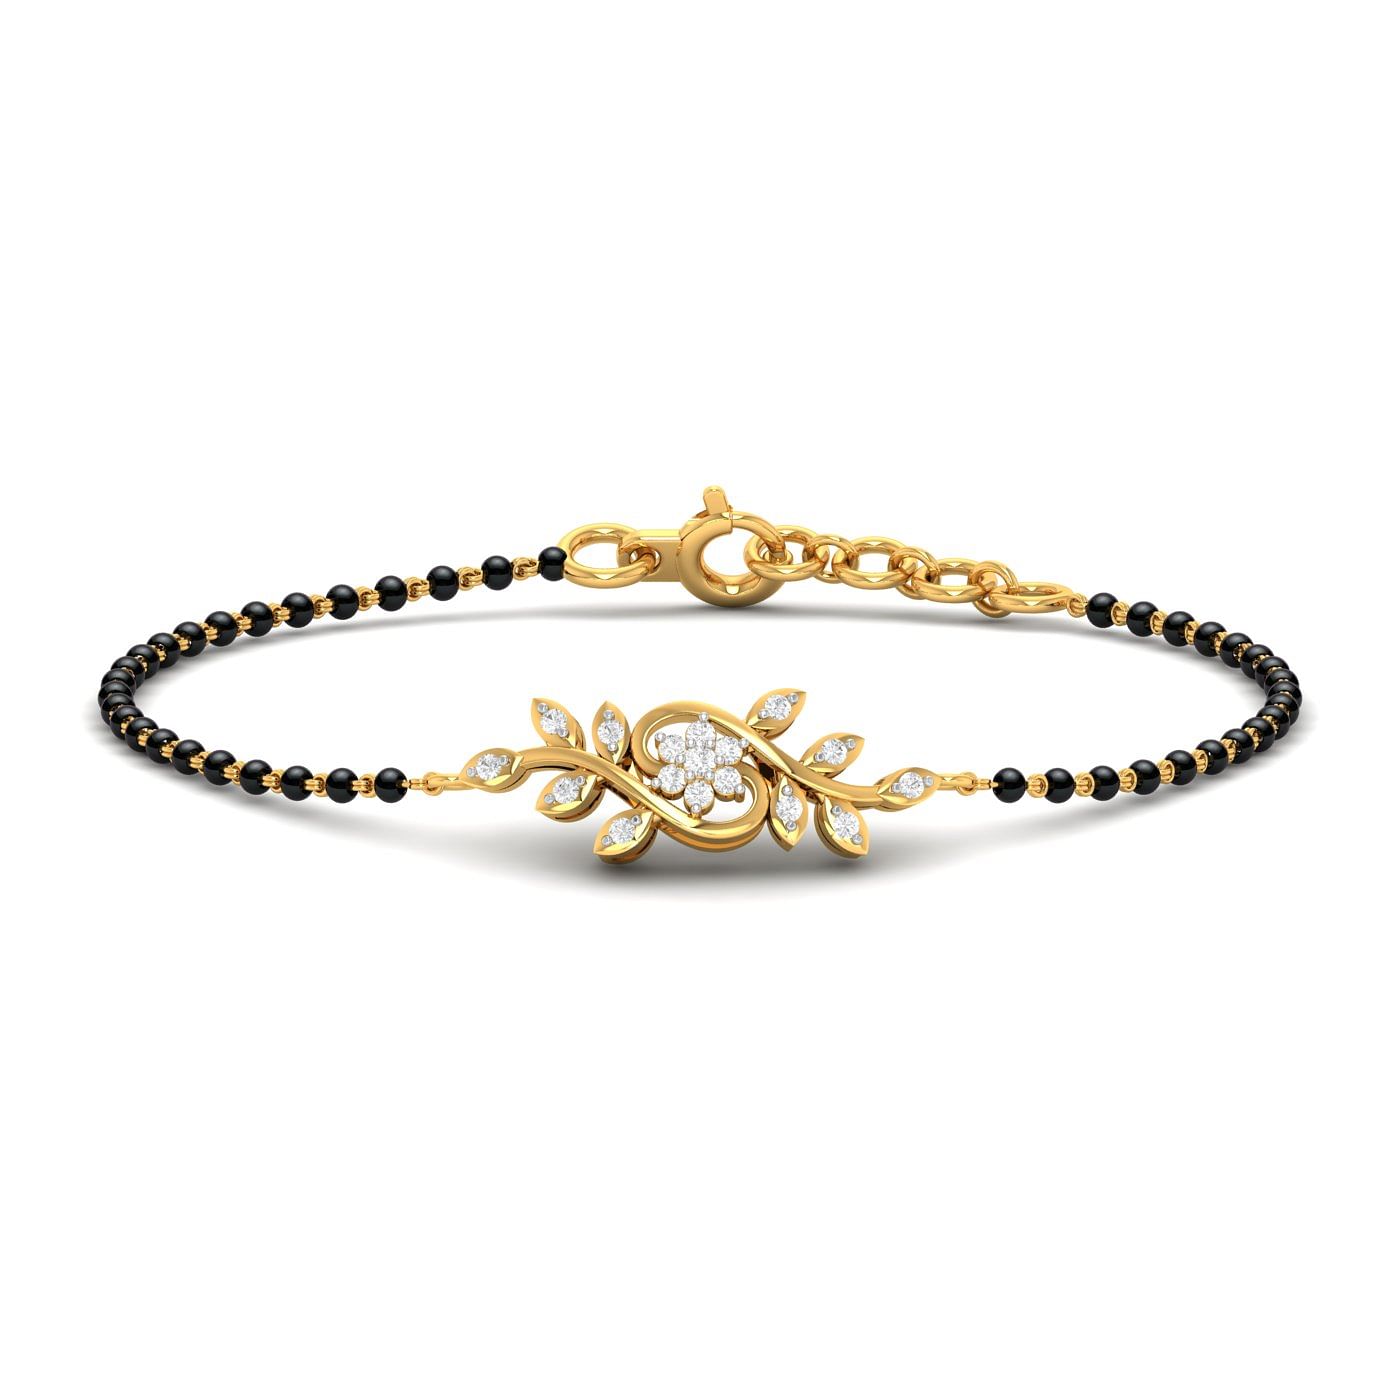 1 Gram Gold Plated Graceful Design Mangalsutra Bracelet For Women - Style  A232 at Rs 1560.00 | Women Bracelet Watches, लेडीज़ ब्रेसलेट वॉच, महिलाओं  की ब्रेसलेट घड़ी - Soni Fashion, Rajkot | ID: 2851758362155